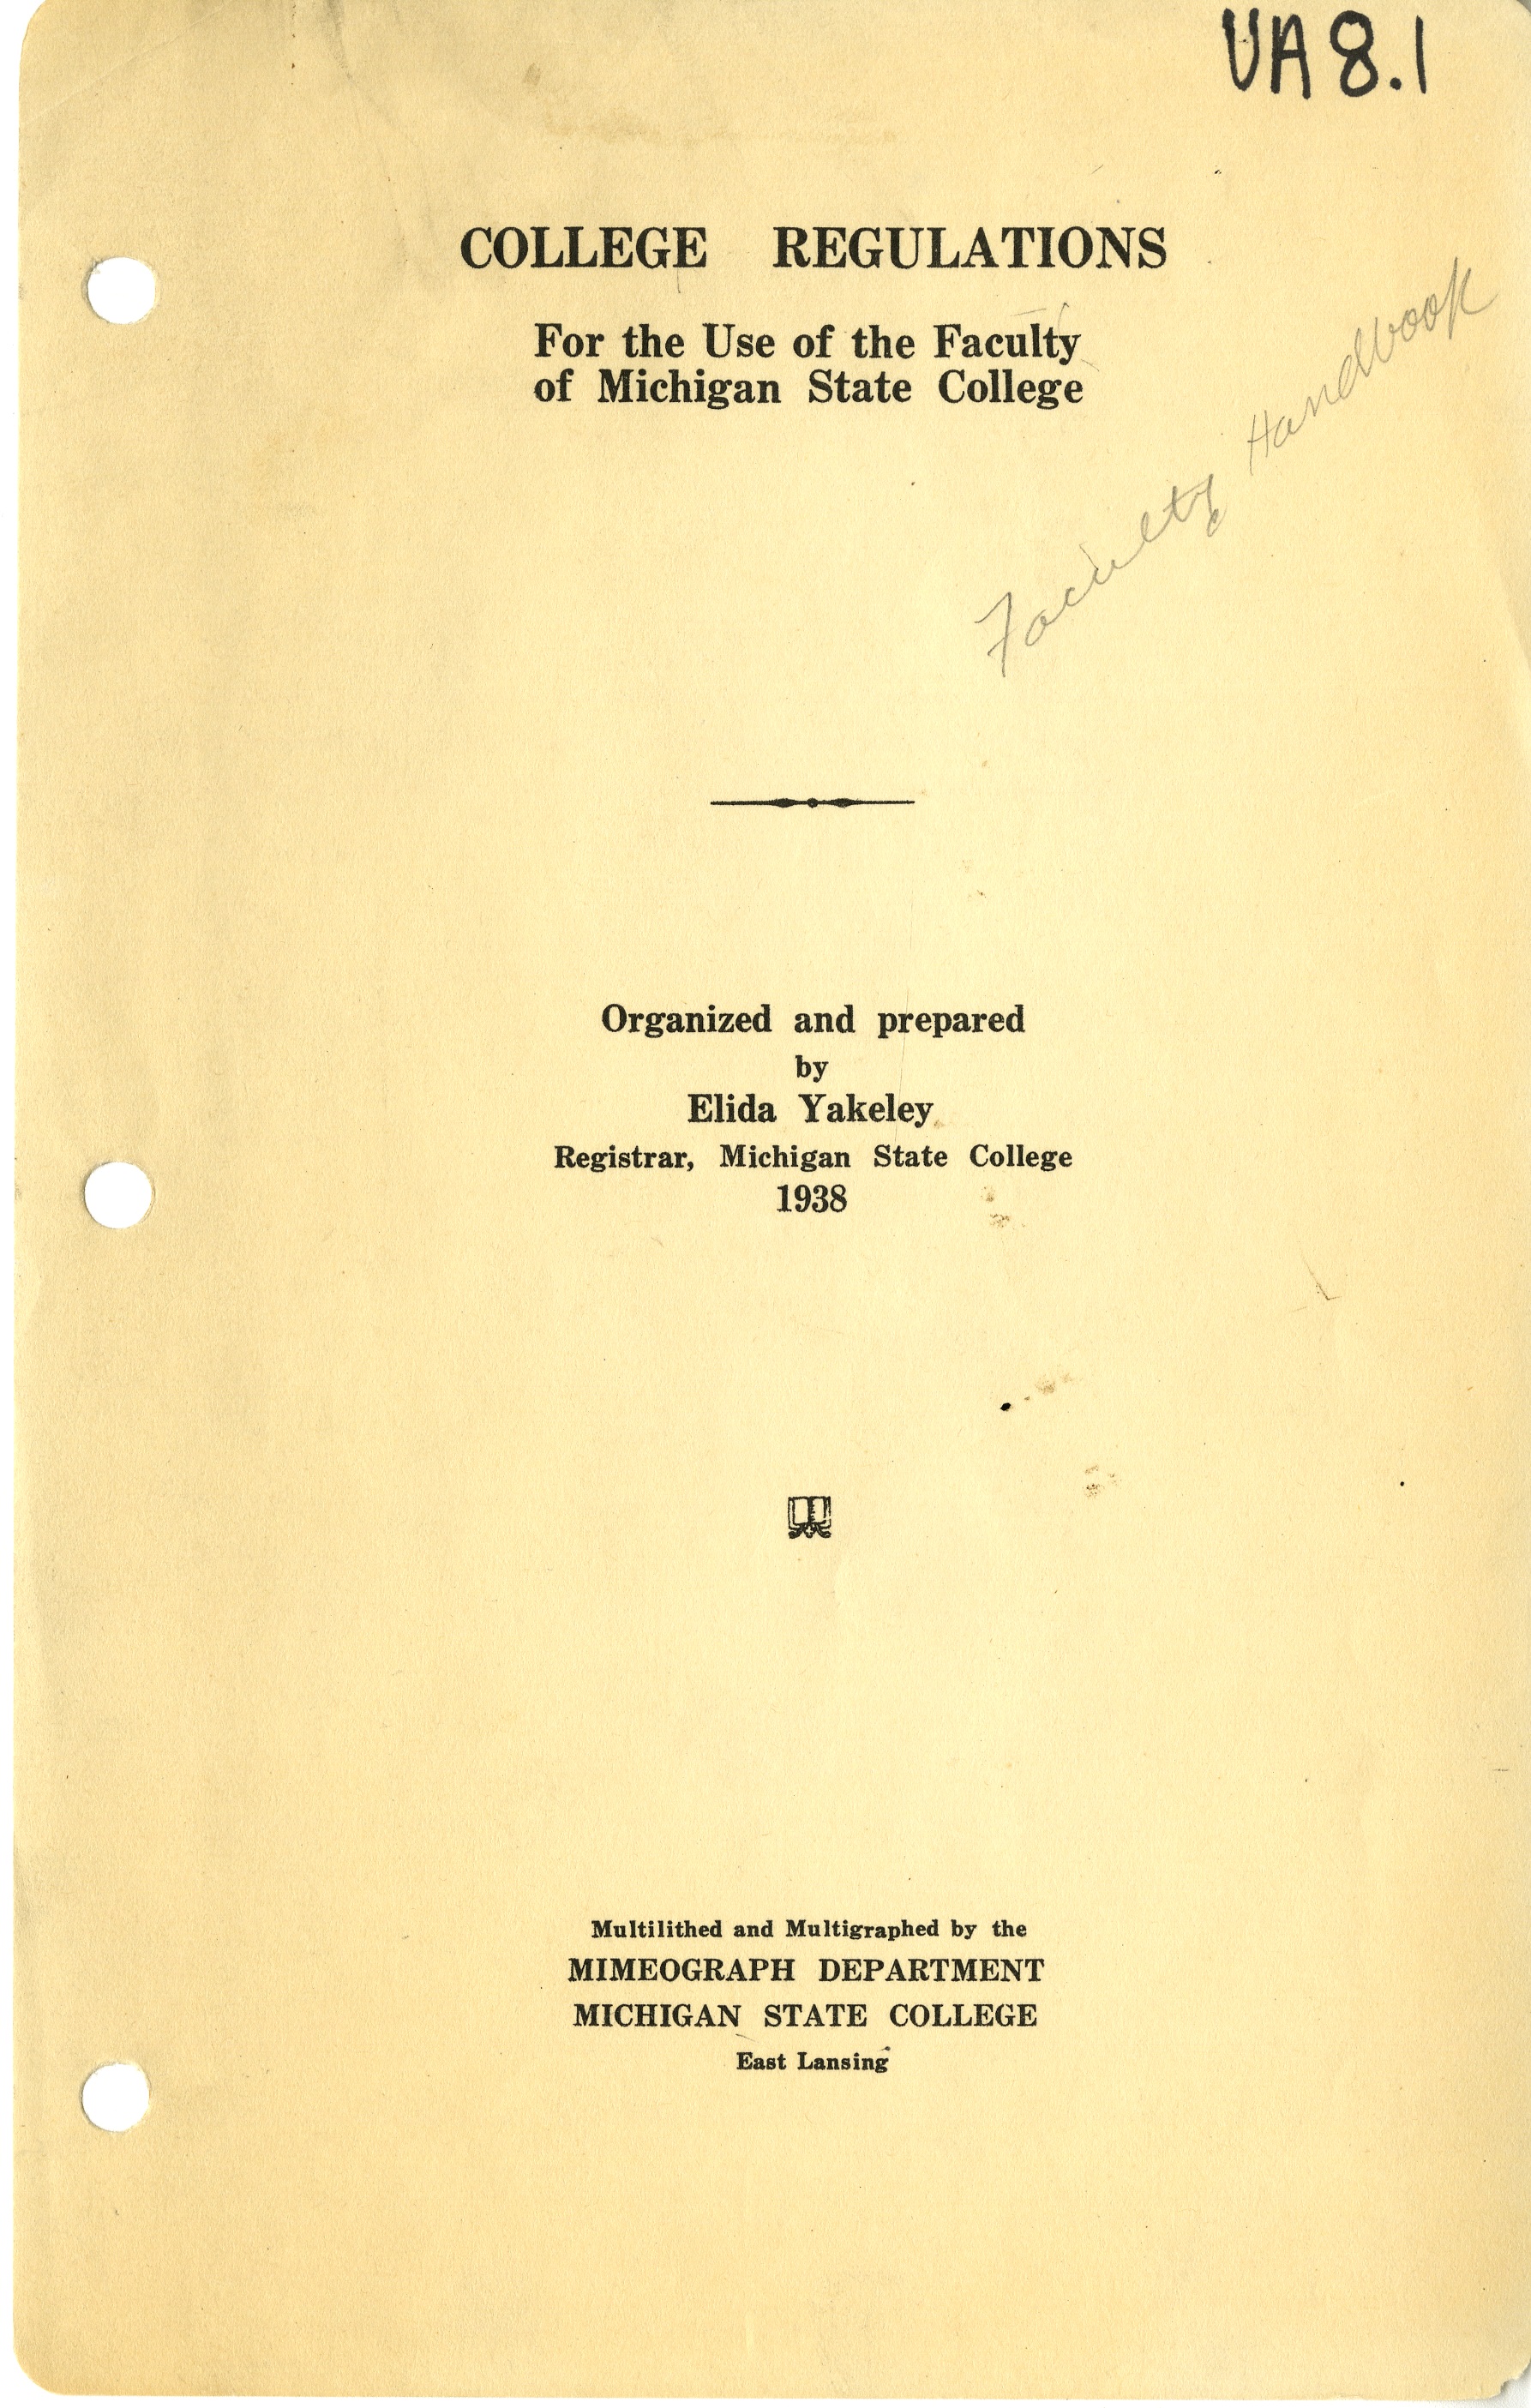 Faculty Handbook, 1938